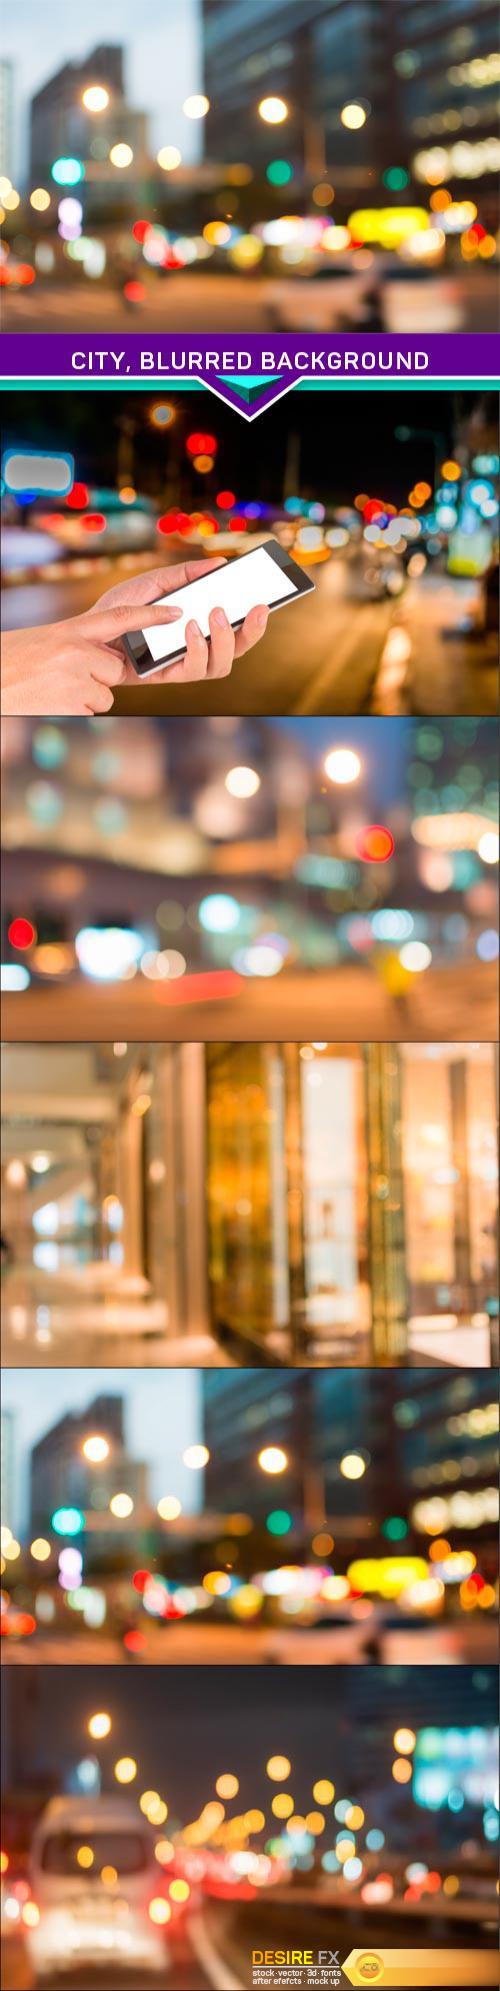 City, blurred background 5x JPEG